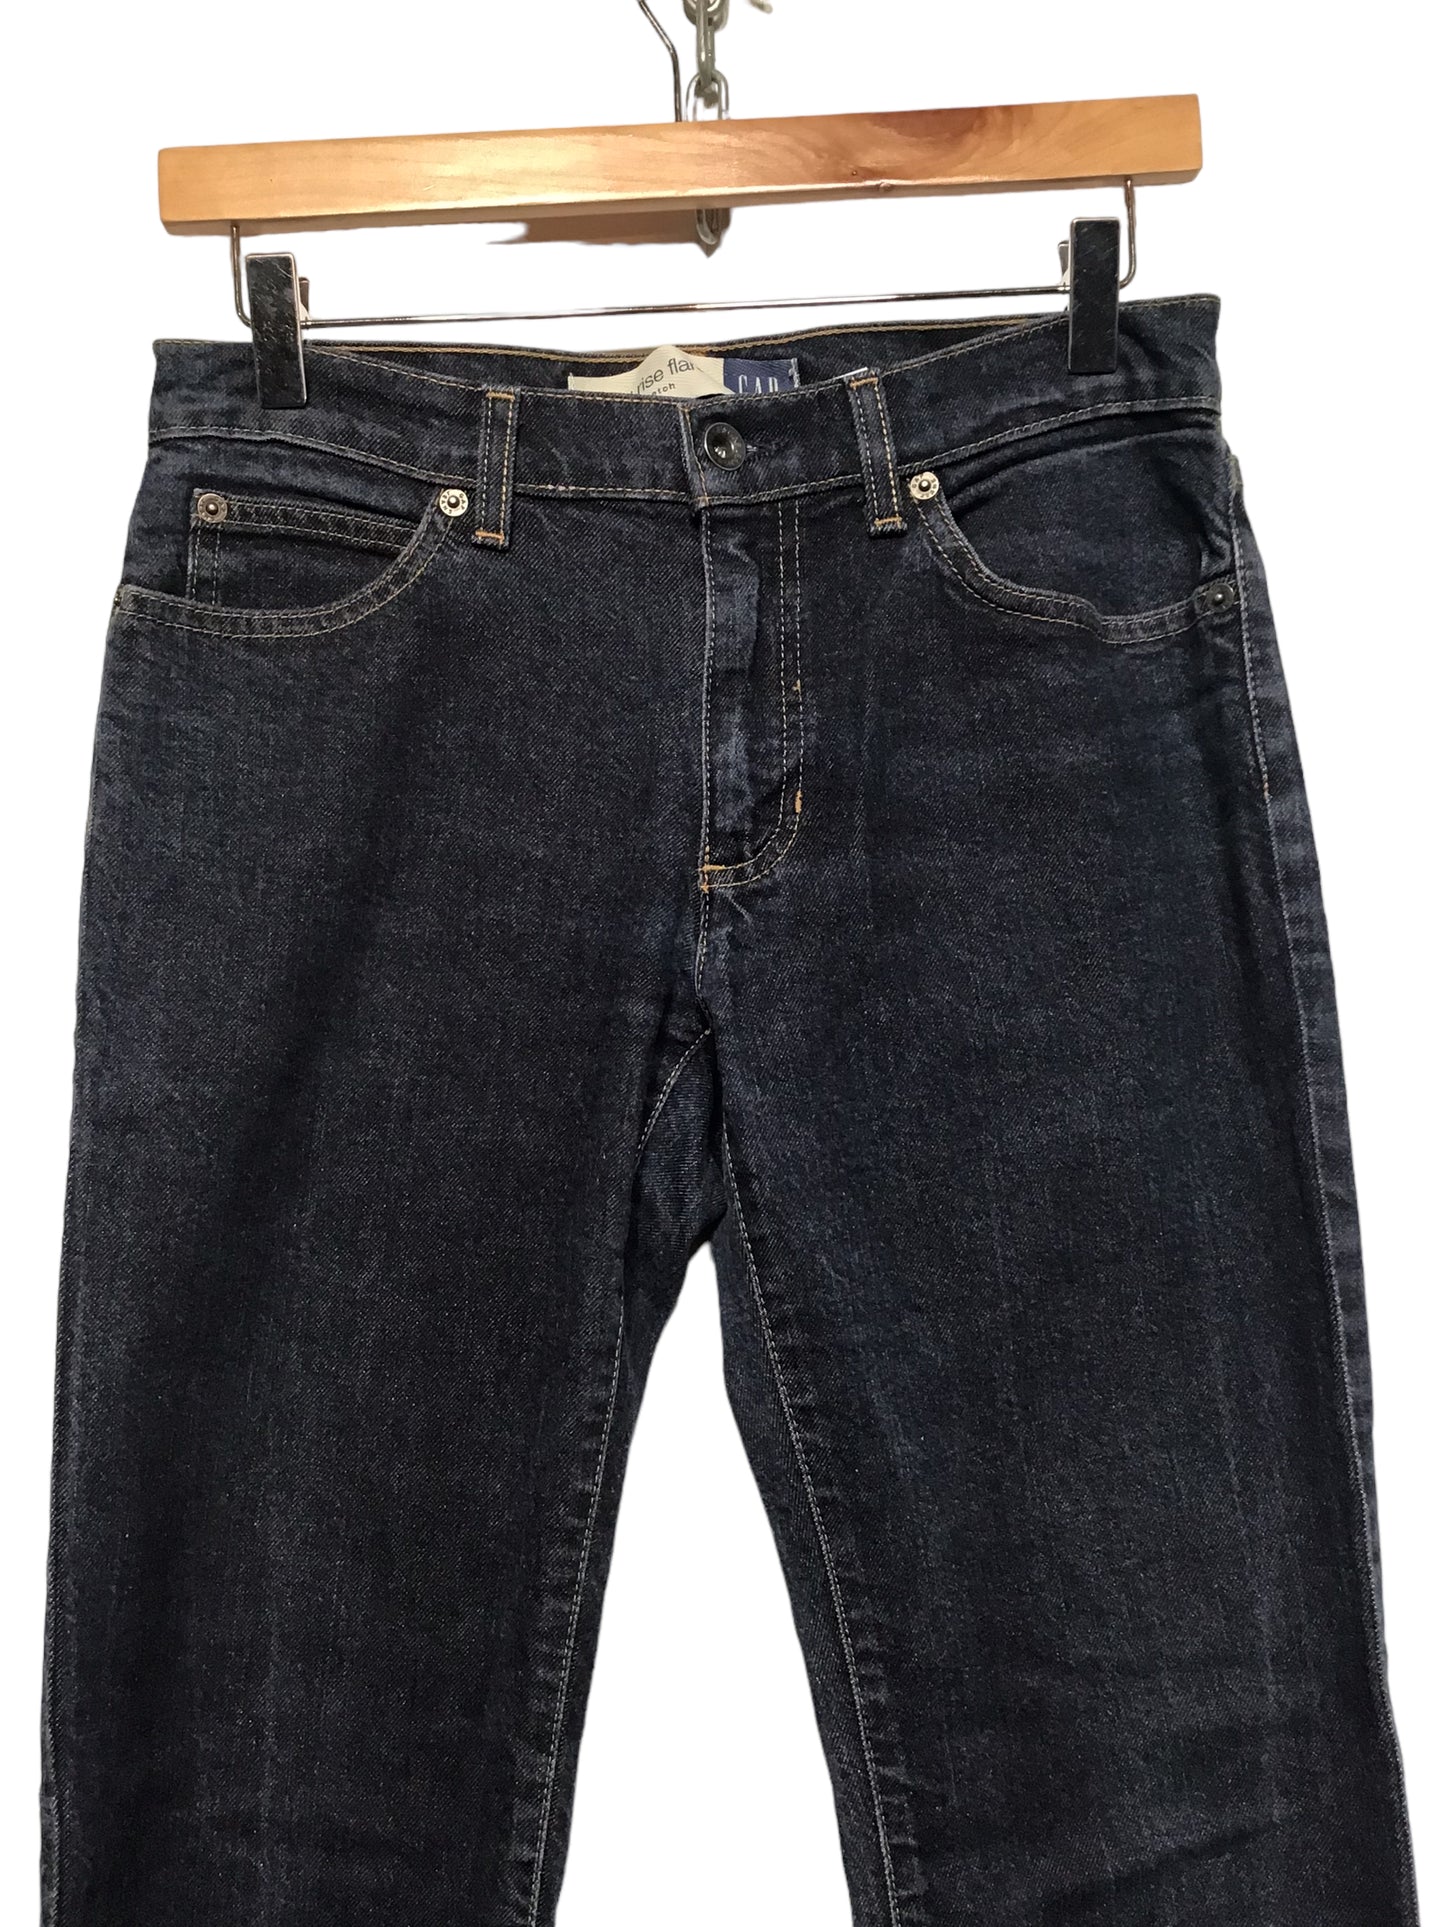 Gap Jeans (30x33)